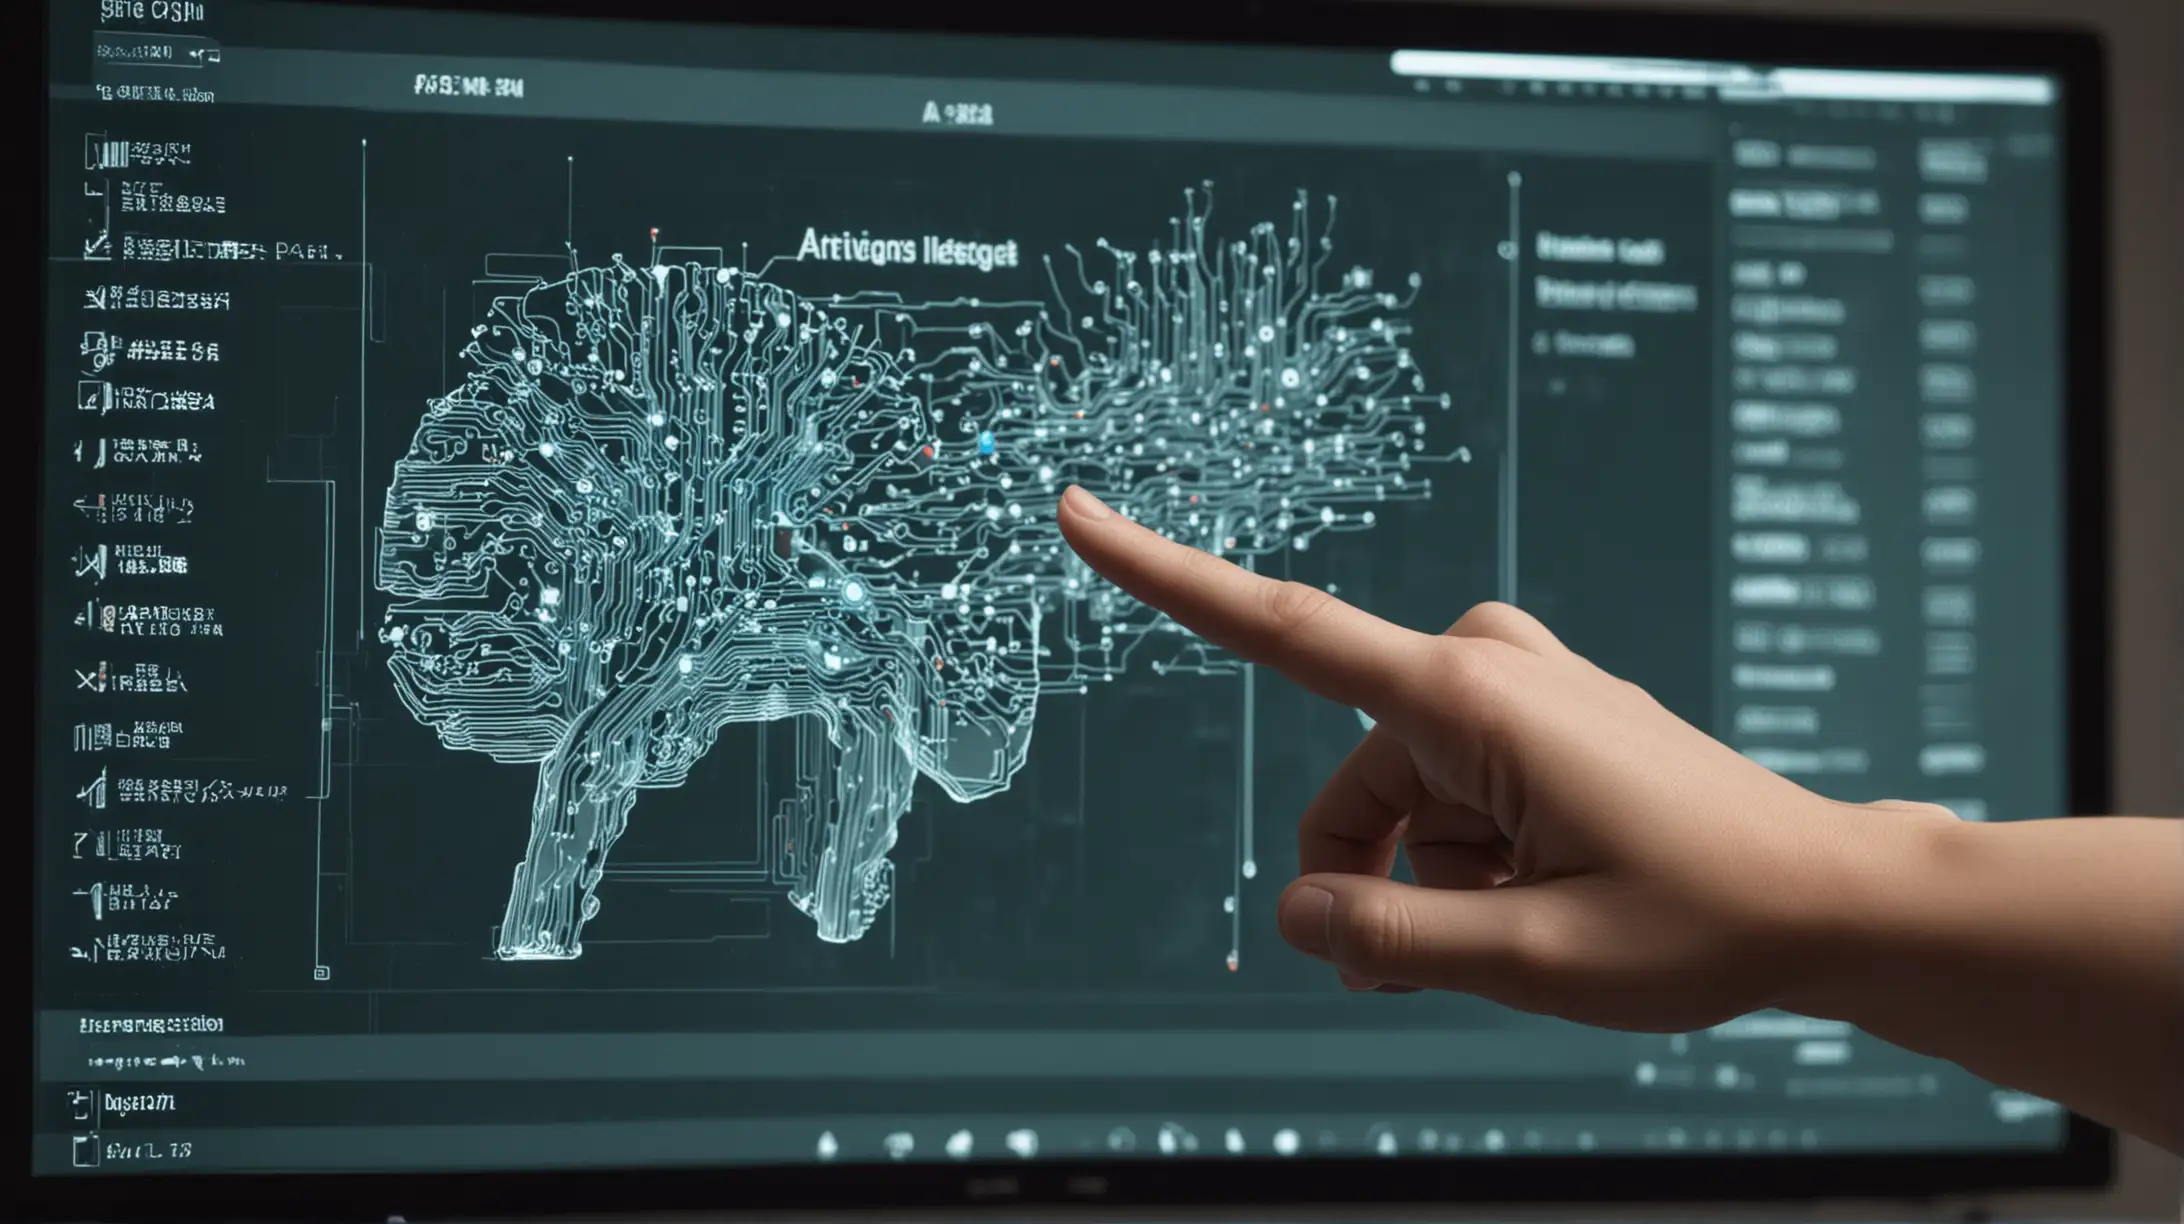 Digital Innovation Pointing Finger at Artificial Intelligence Algorithms on Computer Screen